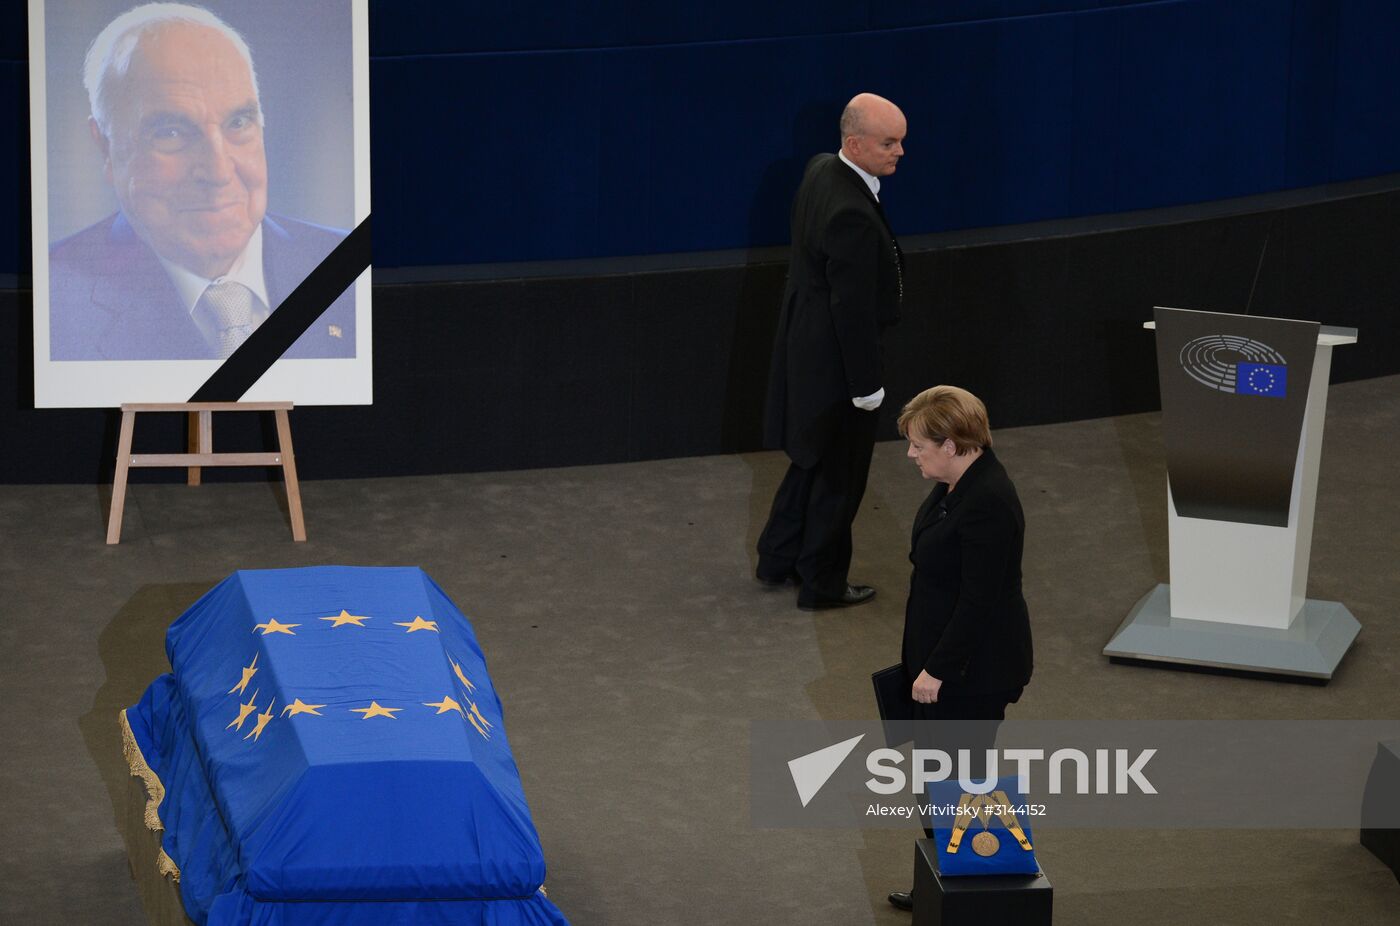 Memorial service for former German Chancellor Helmut Kohl